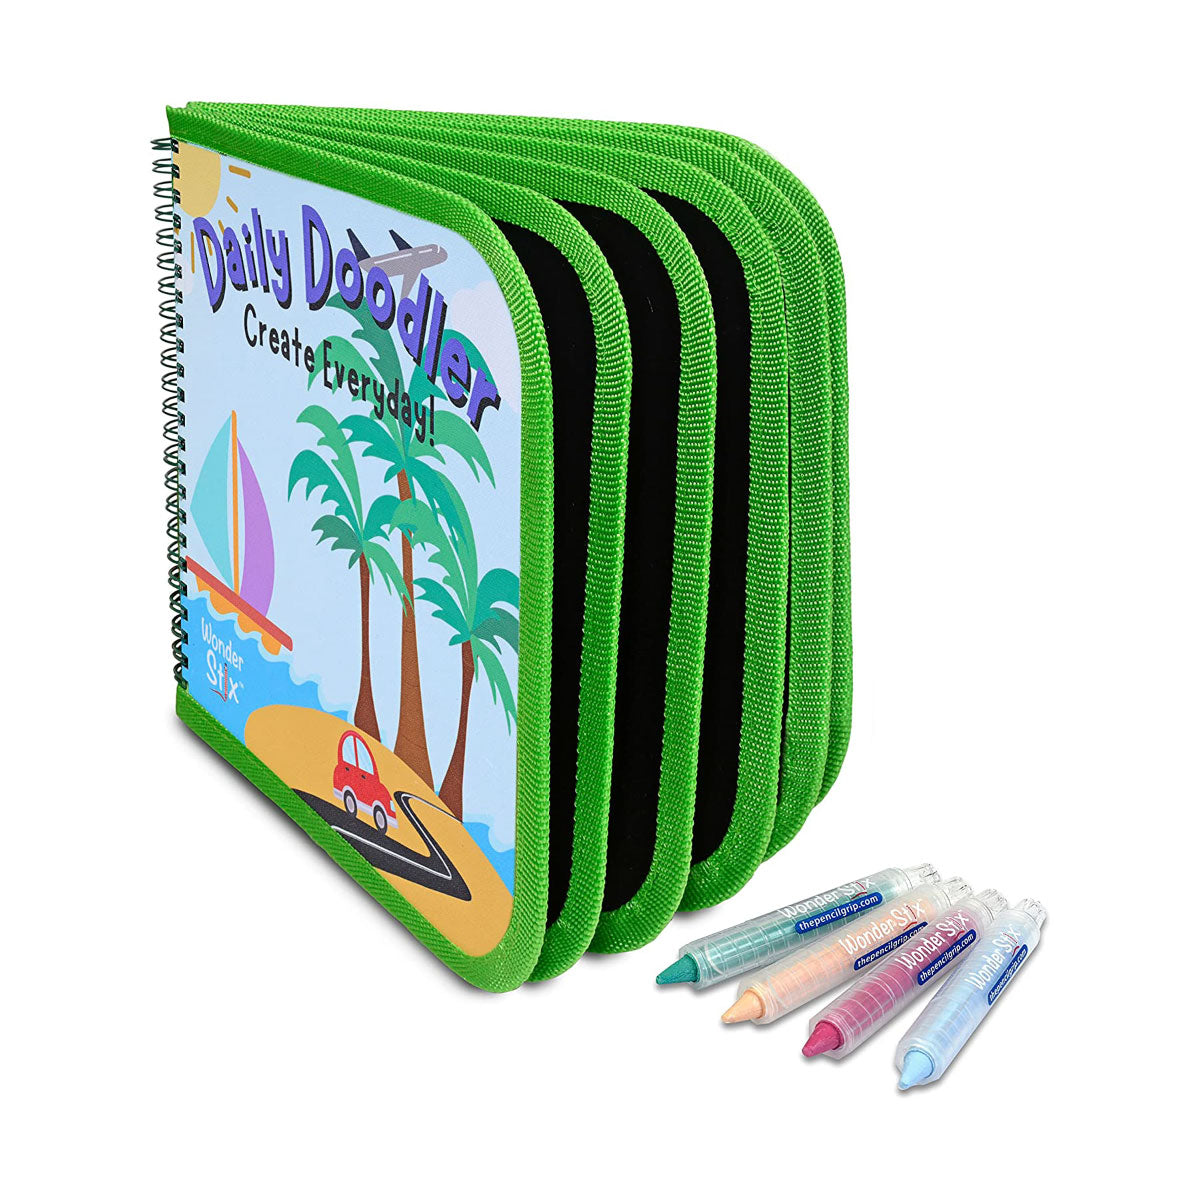 Daily Doodler Travel Reusable Book with 4 Wonder Stix